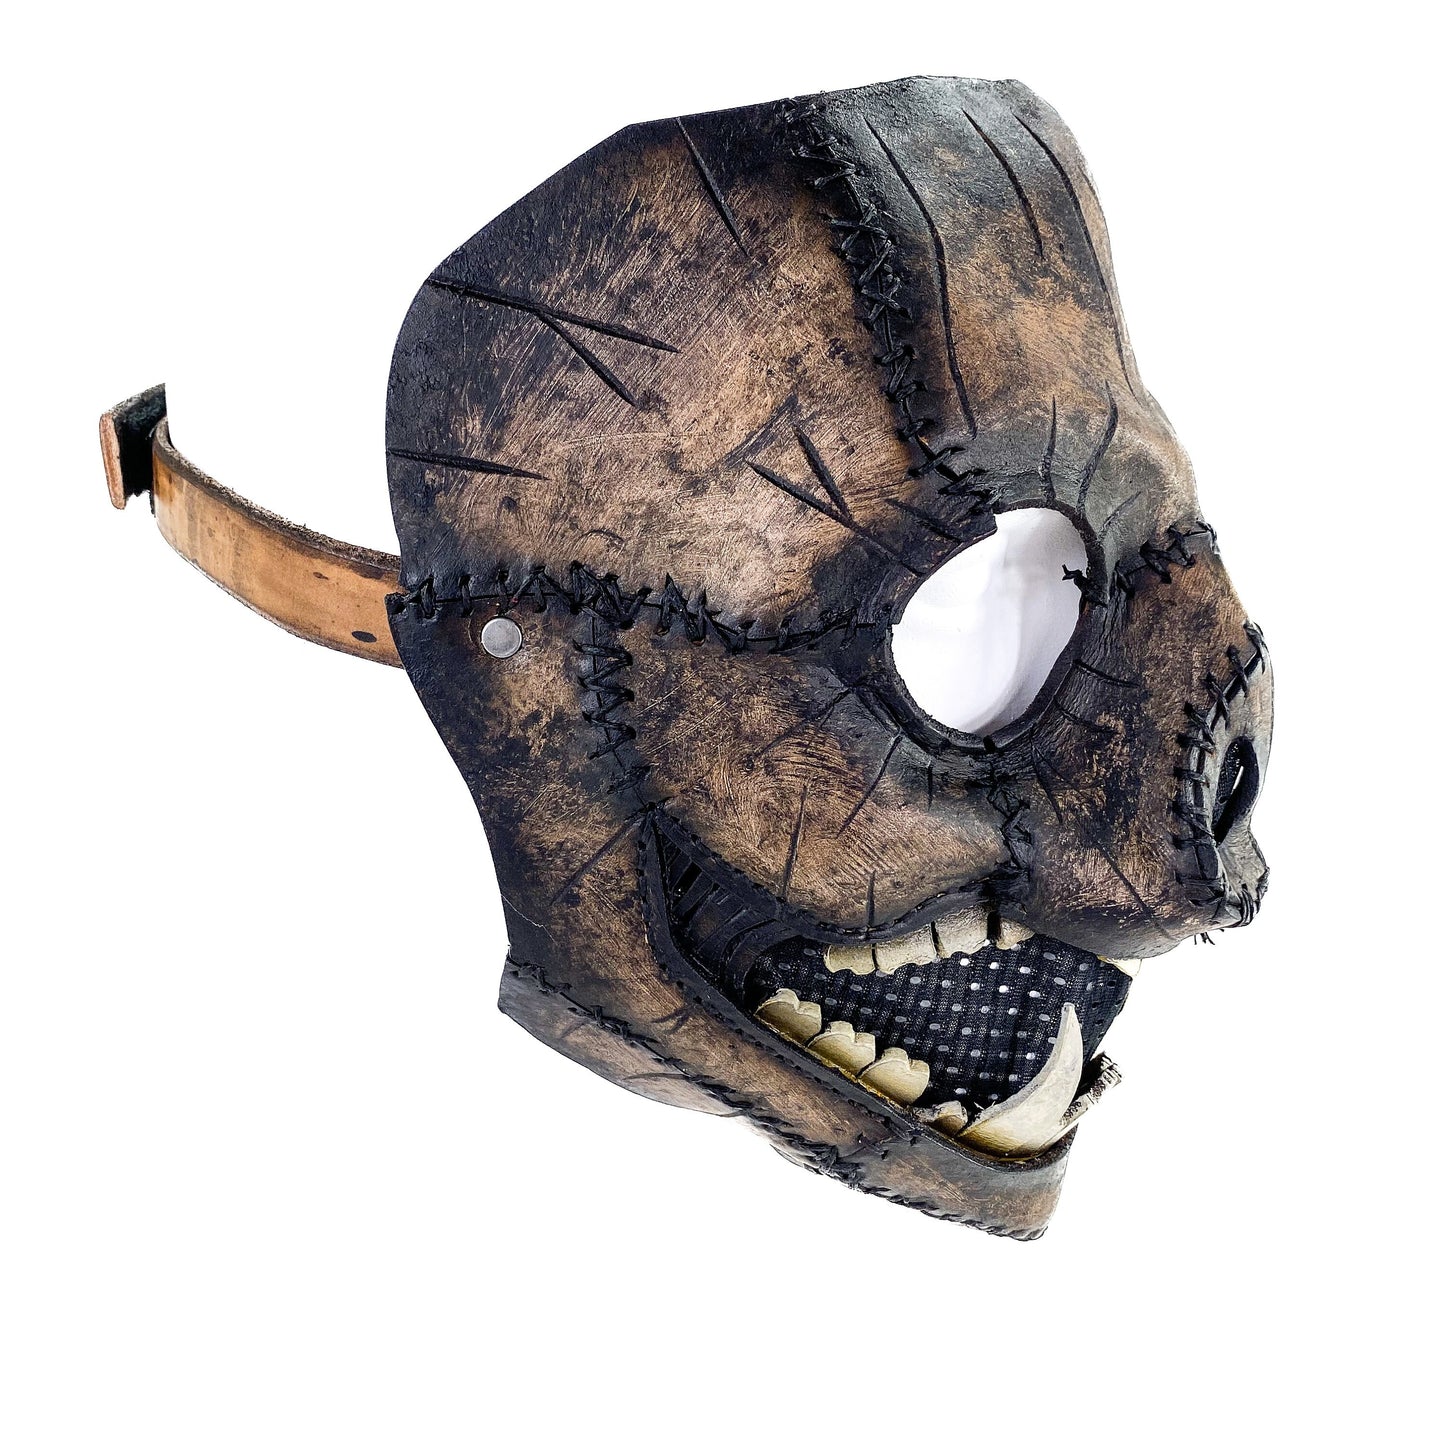 Evil Swine - Genuine Leather Mask - Charred Remains Horror Pig  - Handmade Full Face Cover for Halloween or Performance Costume